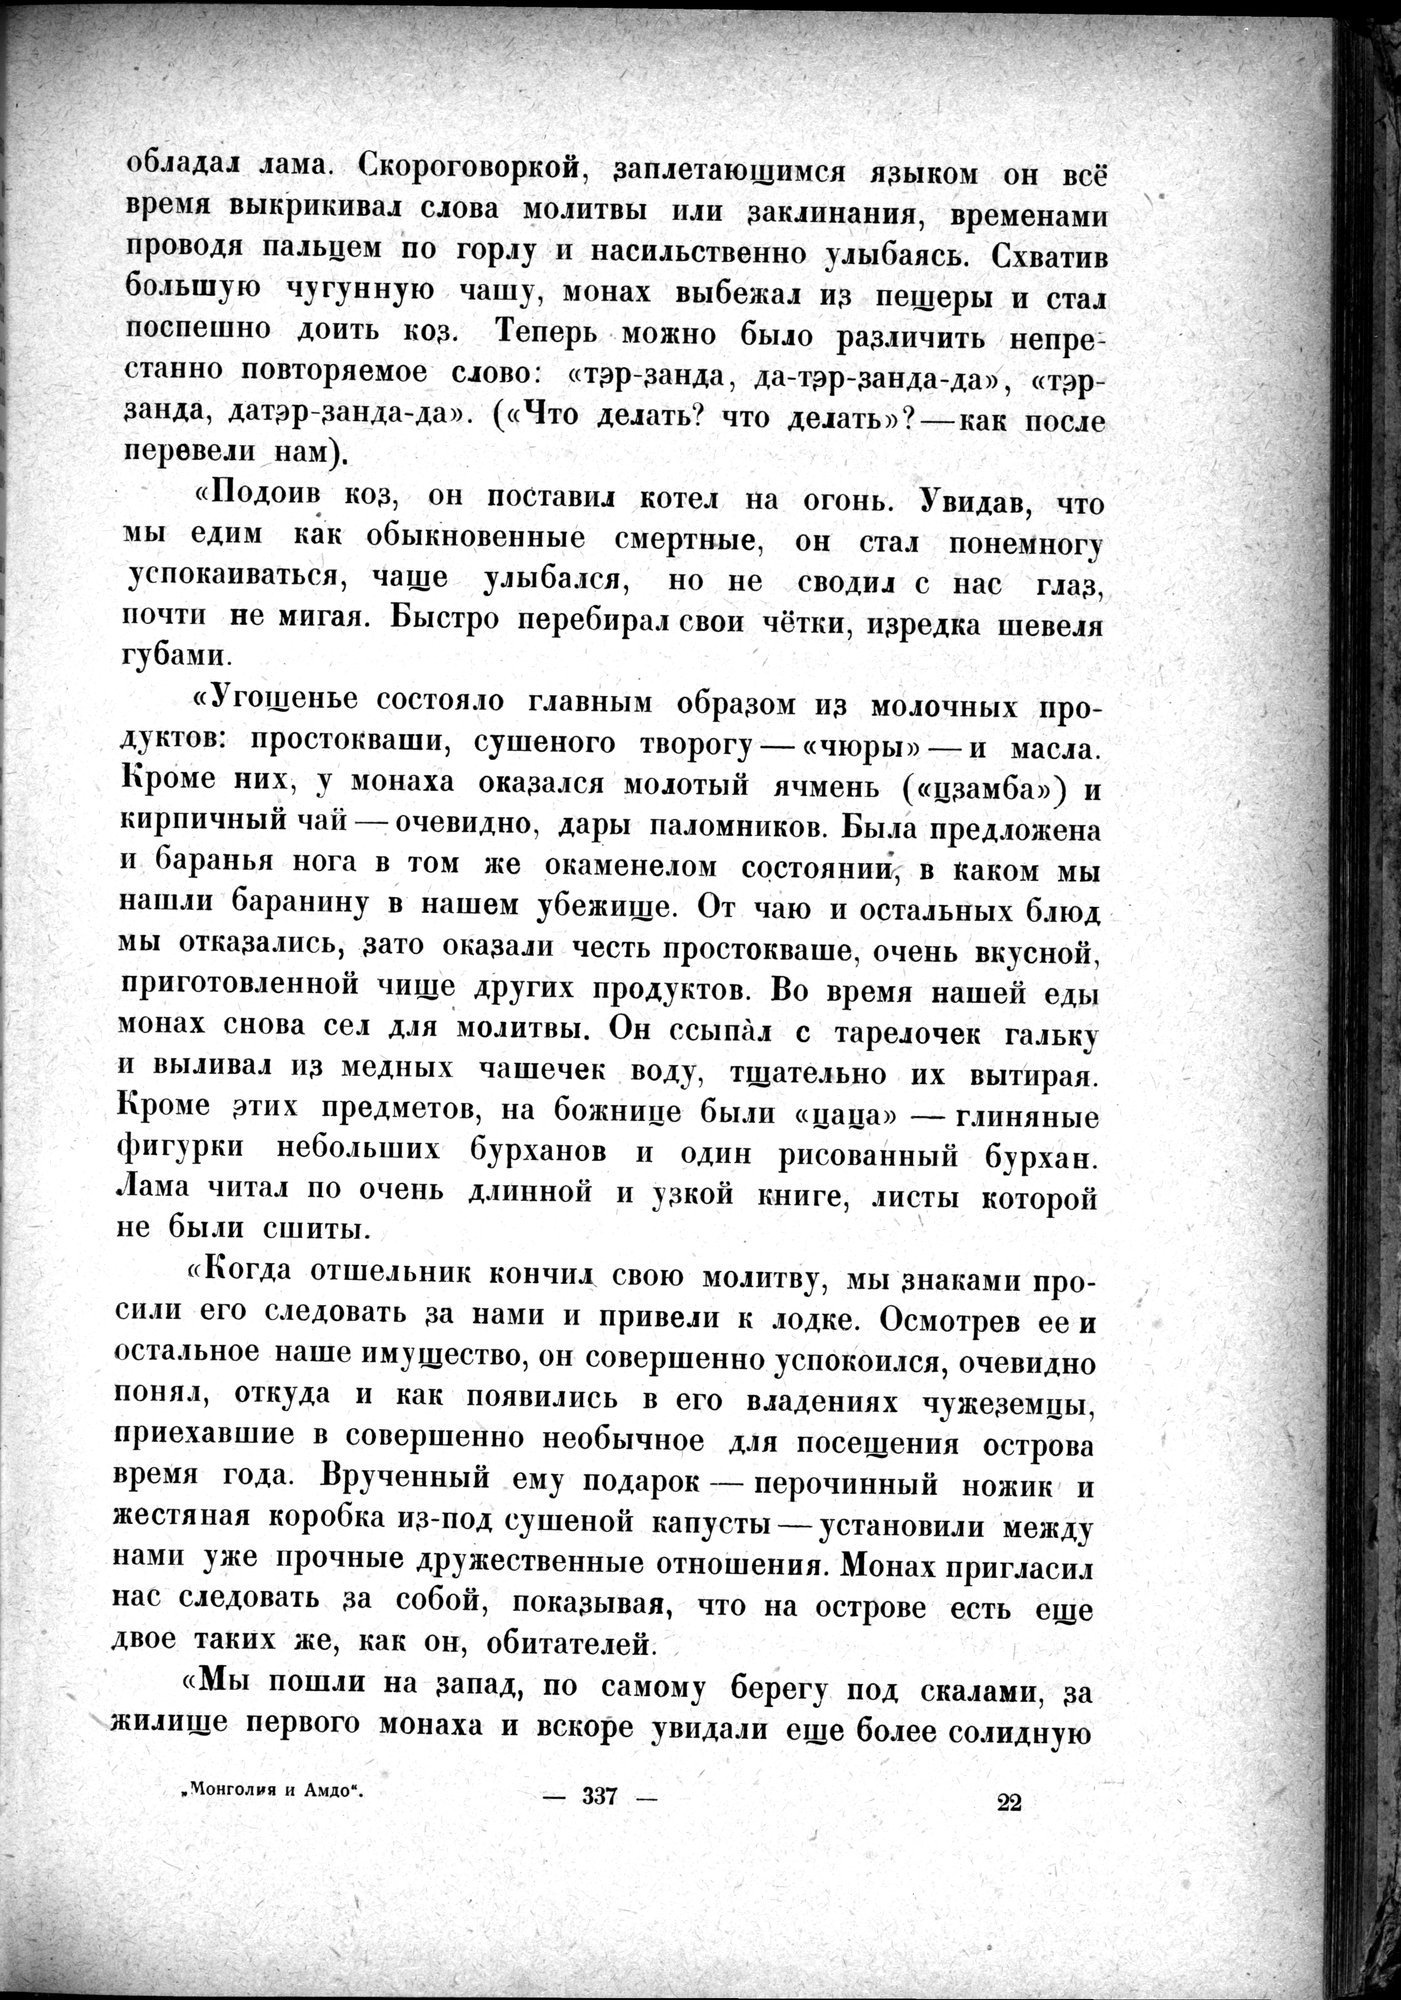 Mongoliya i Amdo i mertby gorod Khara-Khoto : vol.1 / Page 387 (Grayscale High Resolution Image)